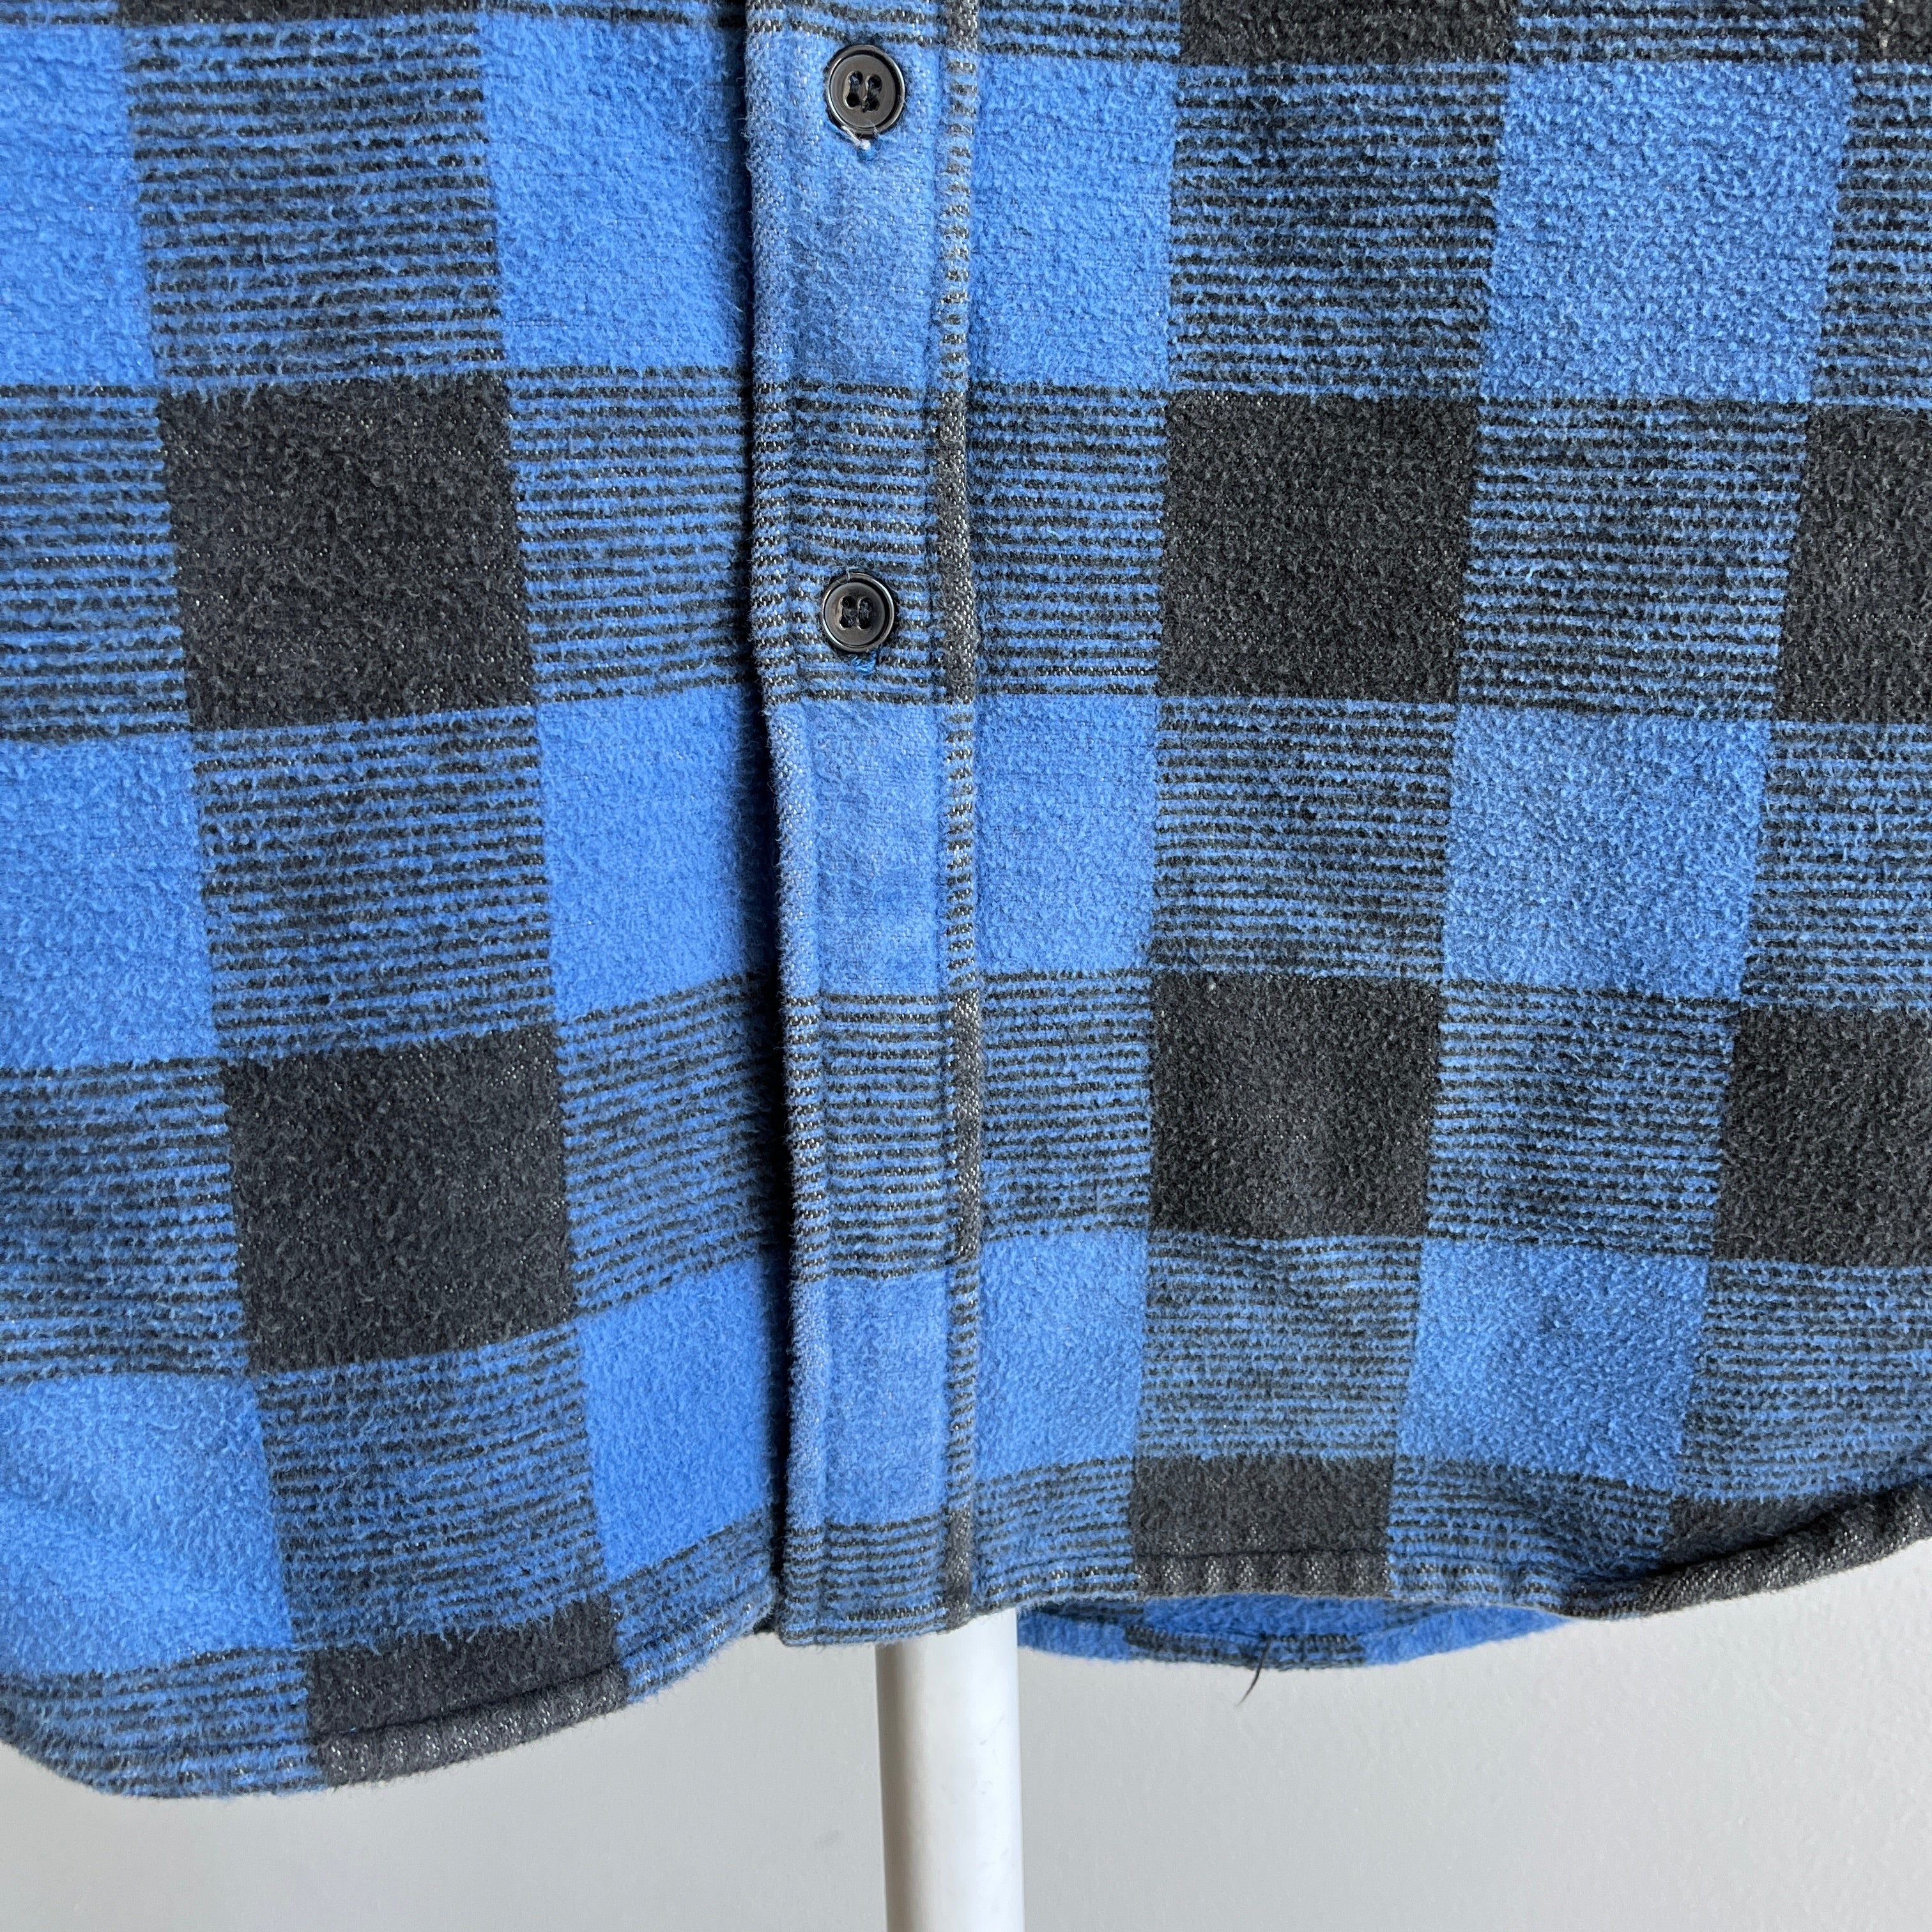 1990s Blue Buffalo Plaid HEAVY Moleskin Cotton Flannel